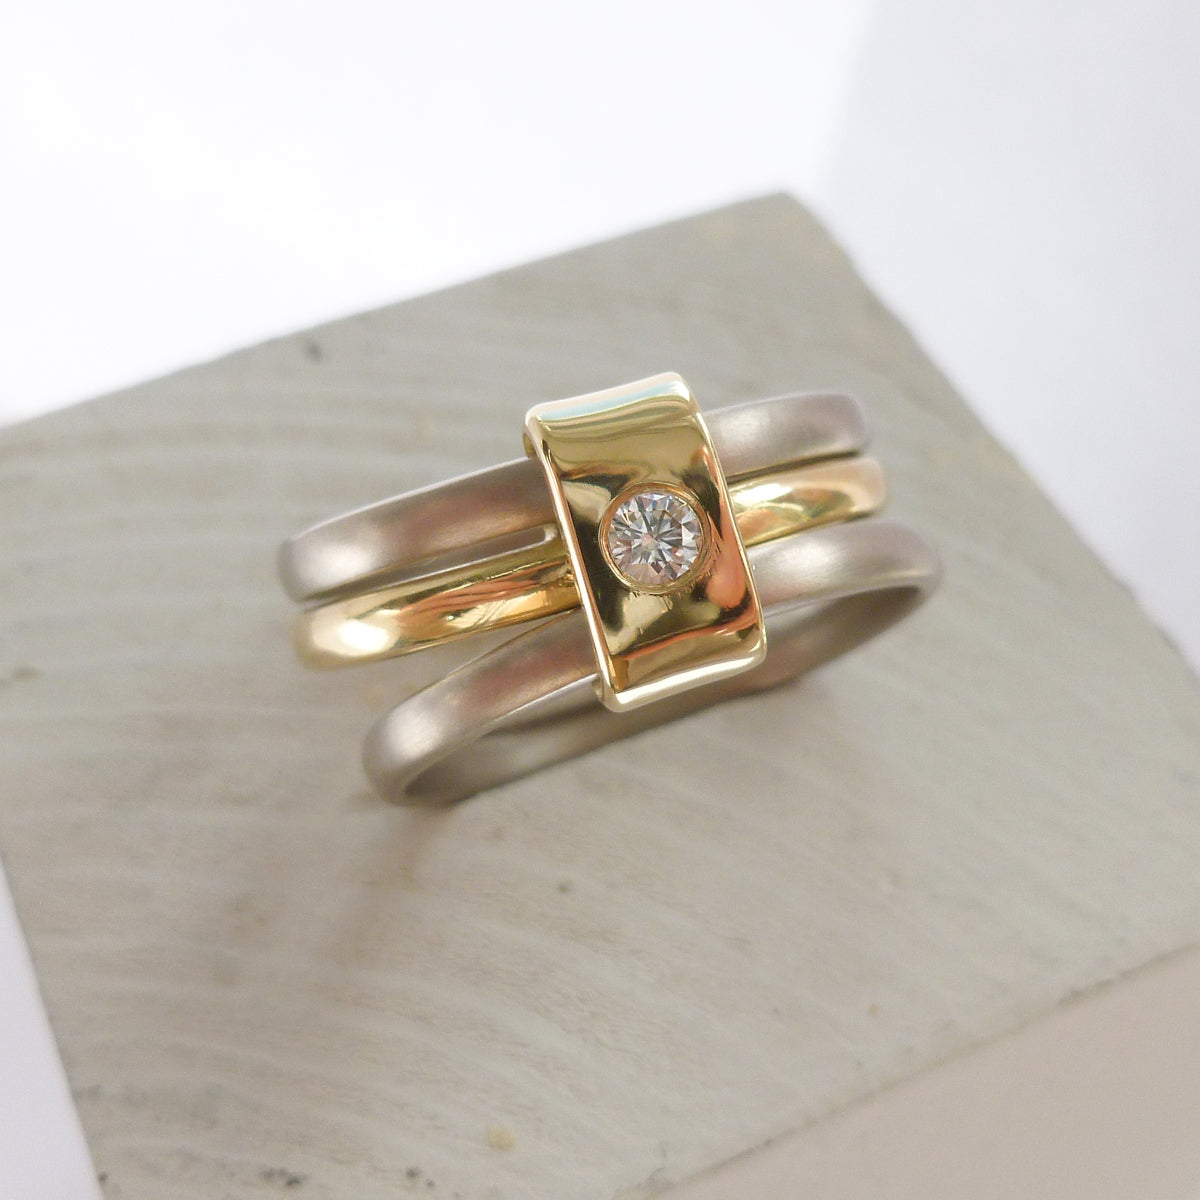 Contemporary jewellery, handmade, modern, bespoke ring by Sue Lane. Triple band ring, interlocking and linked.